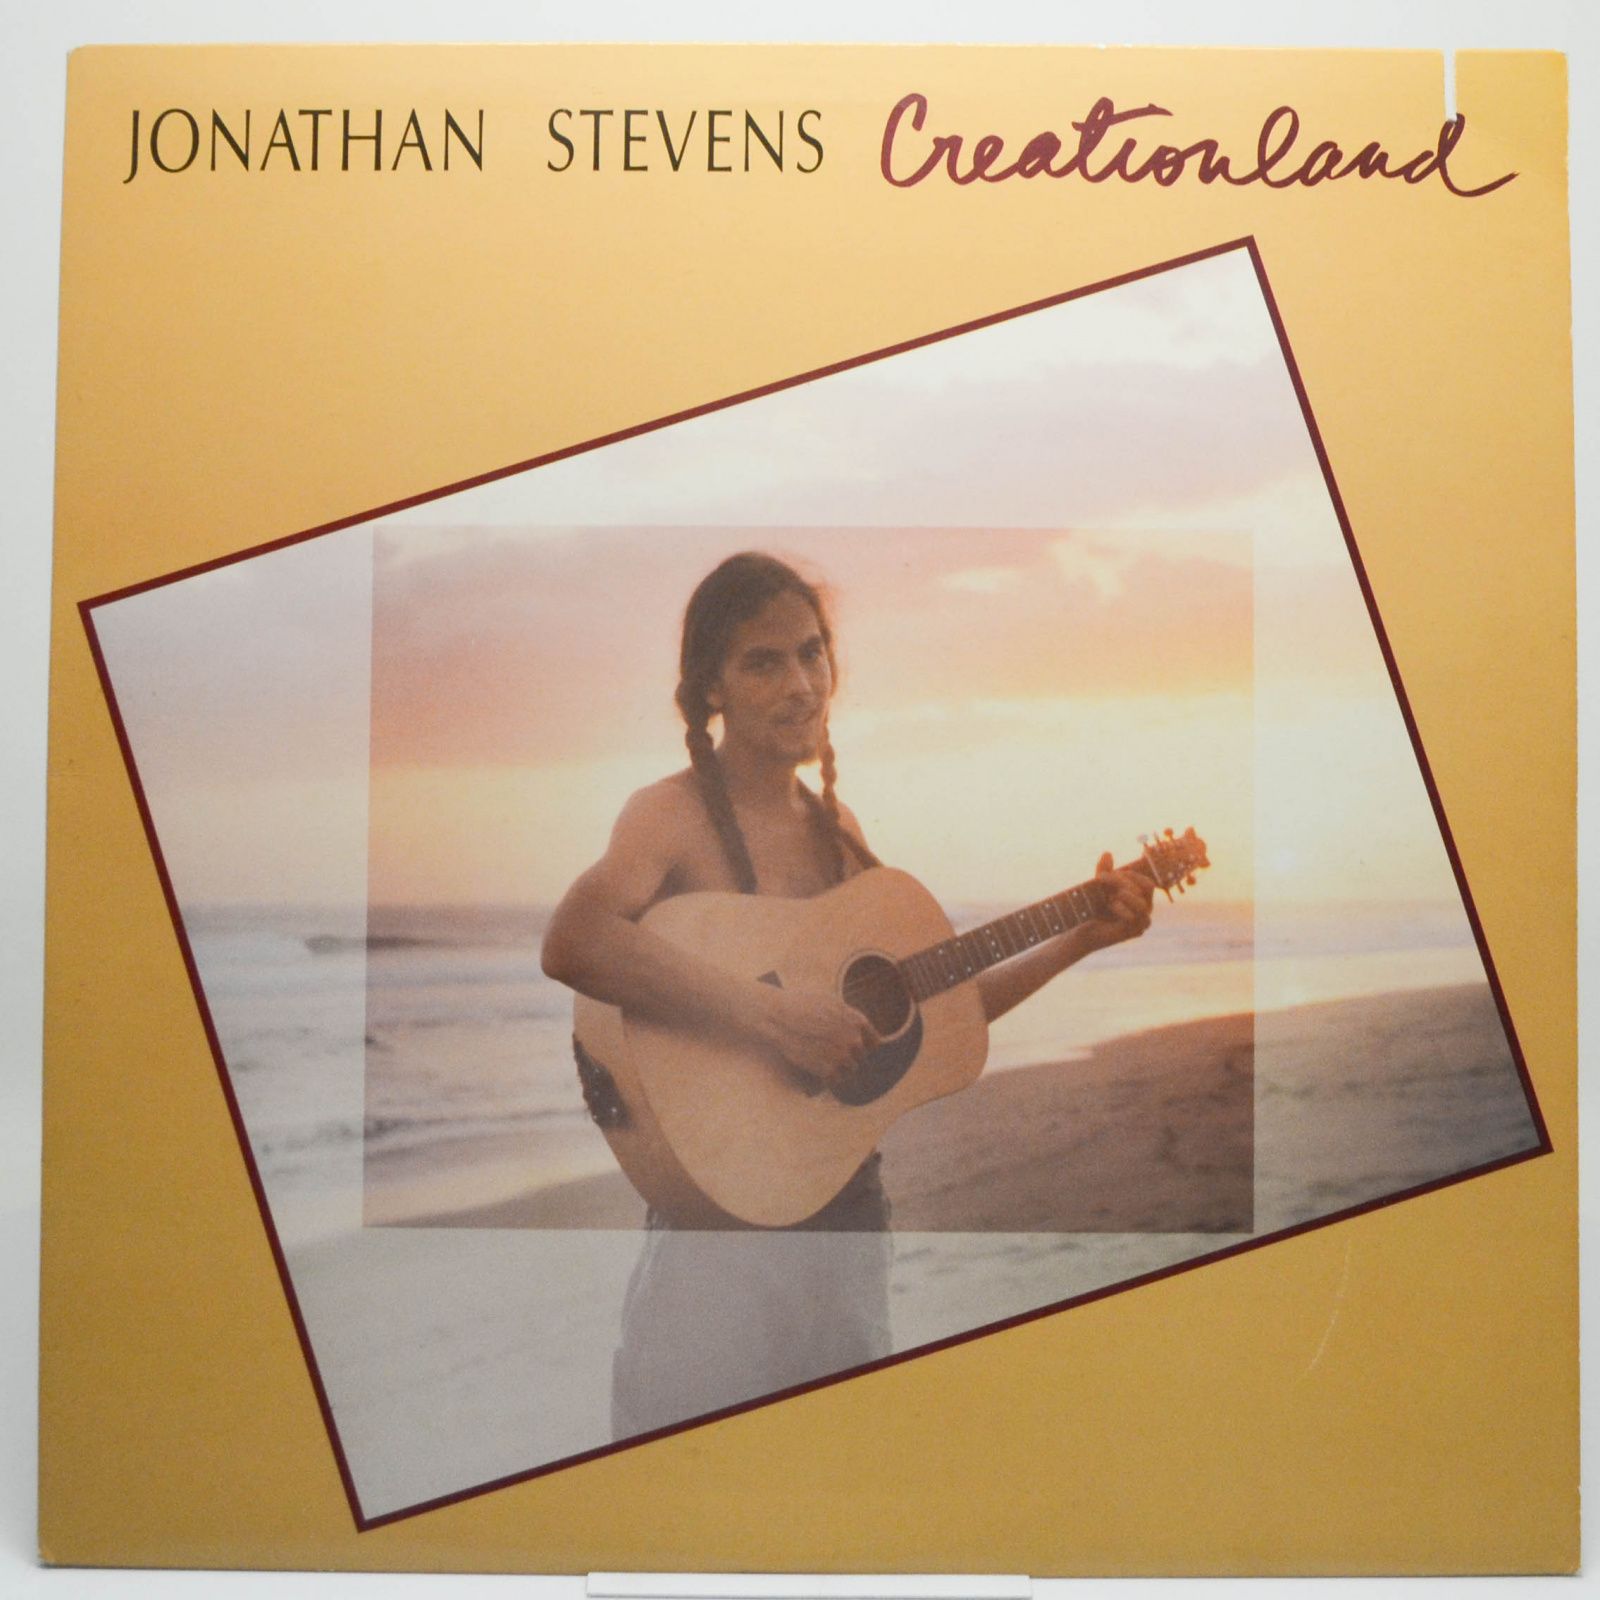 Jonathan Stevens — Creationland, 1987